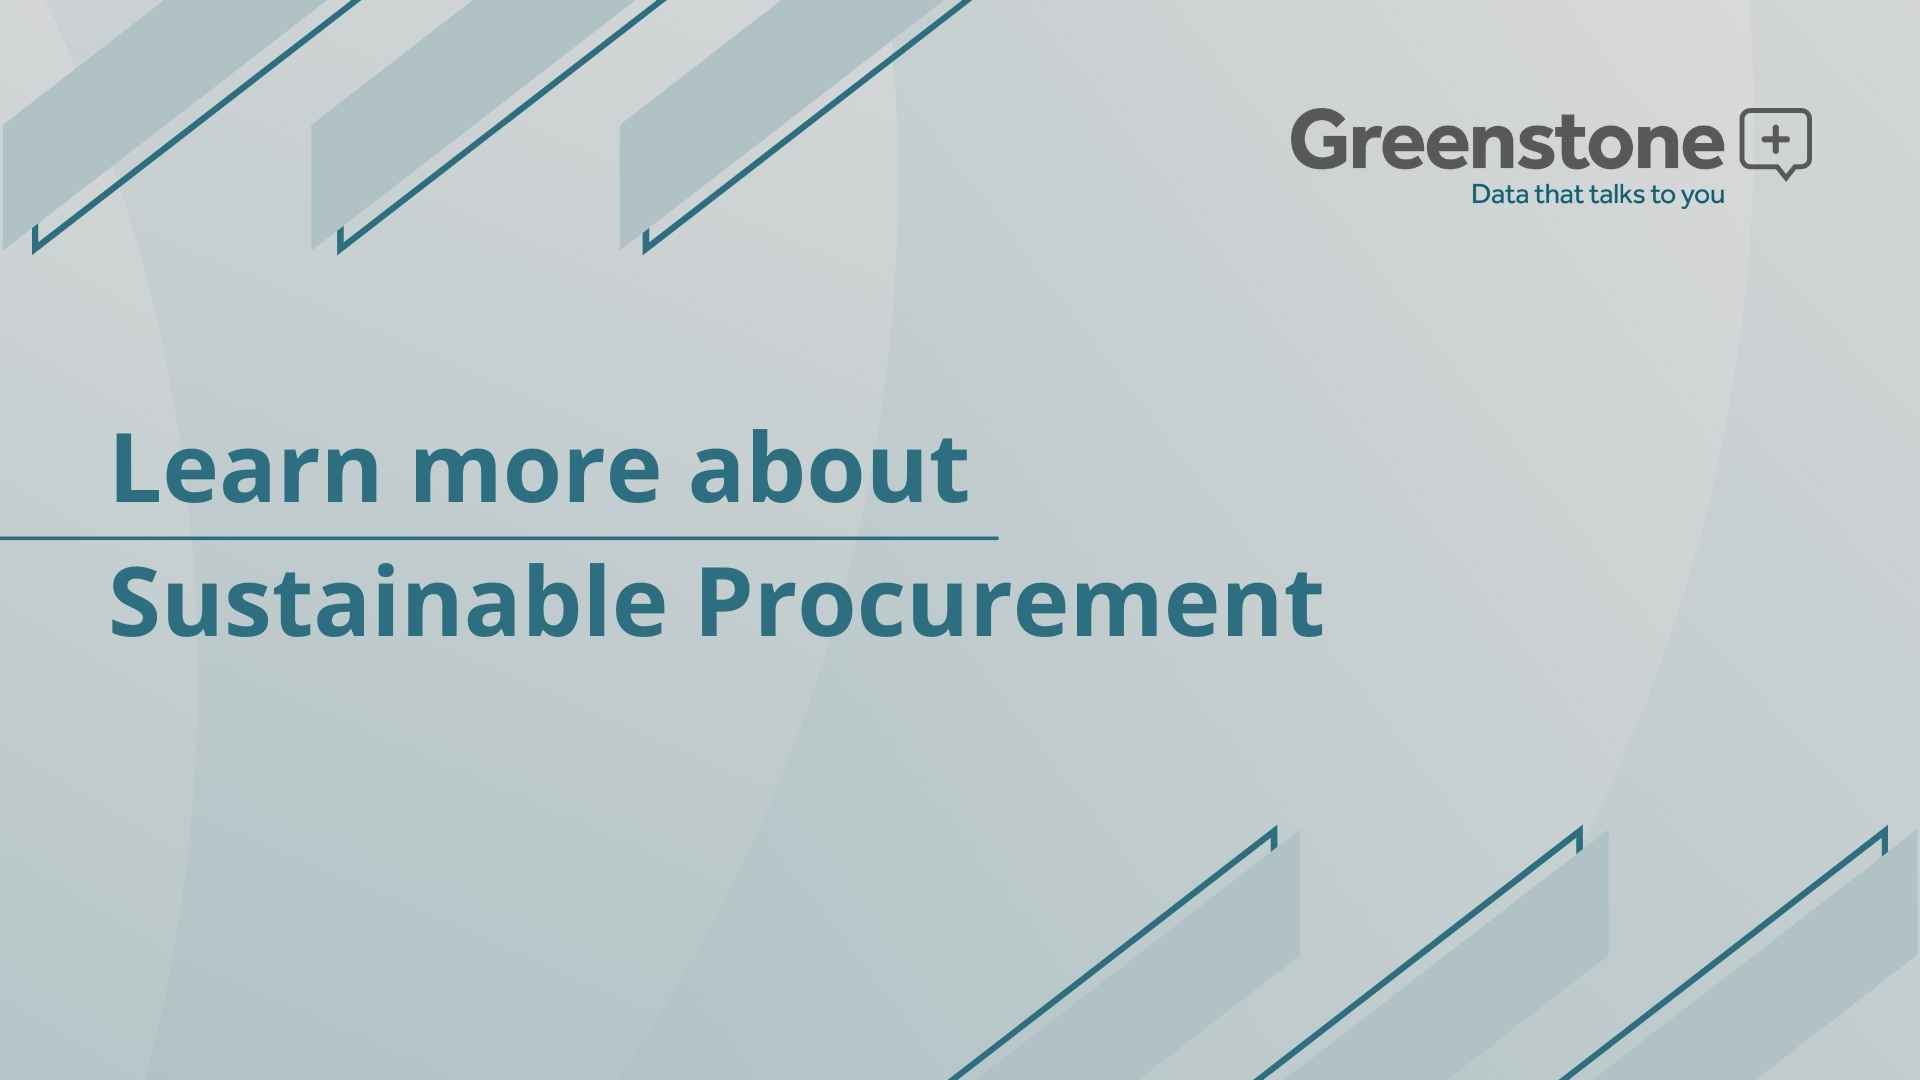 Greenstone & Sustainable Procurement